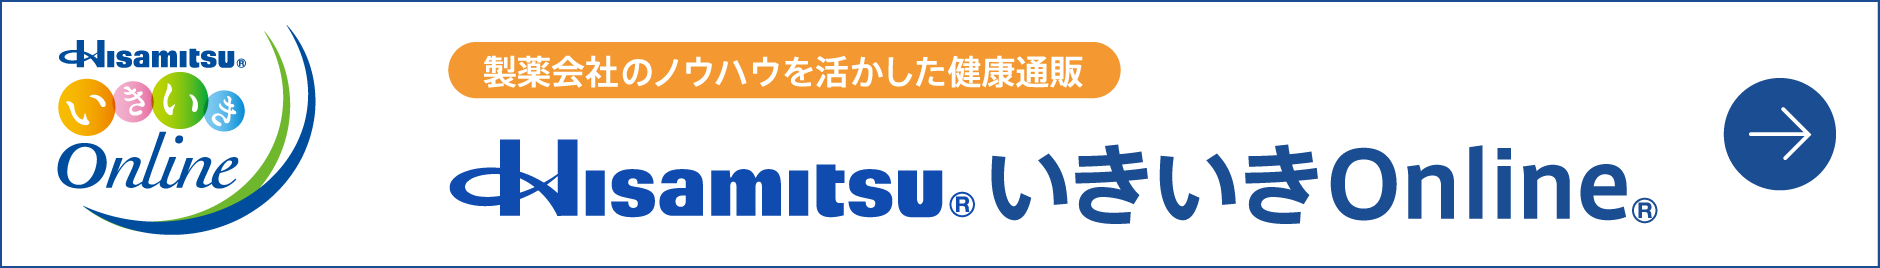 Hisamitsu®いきいきOnline®